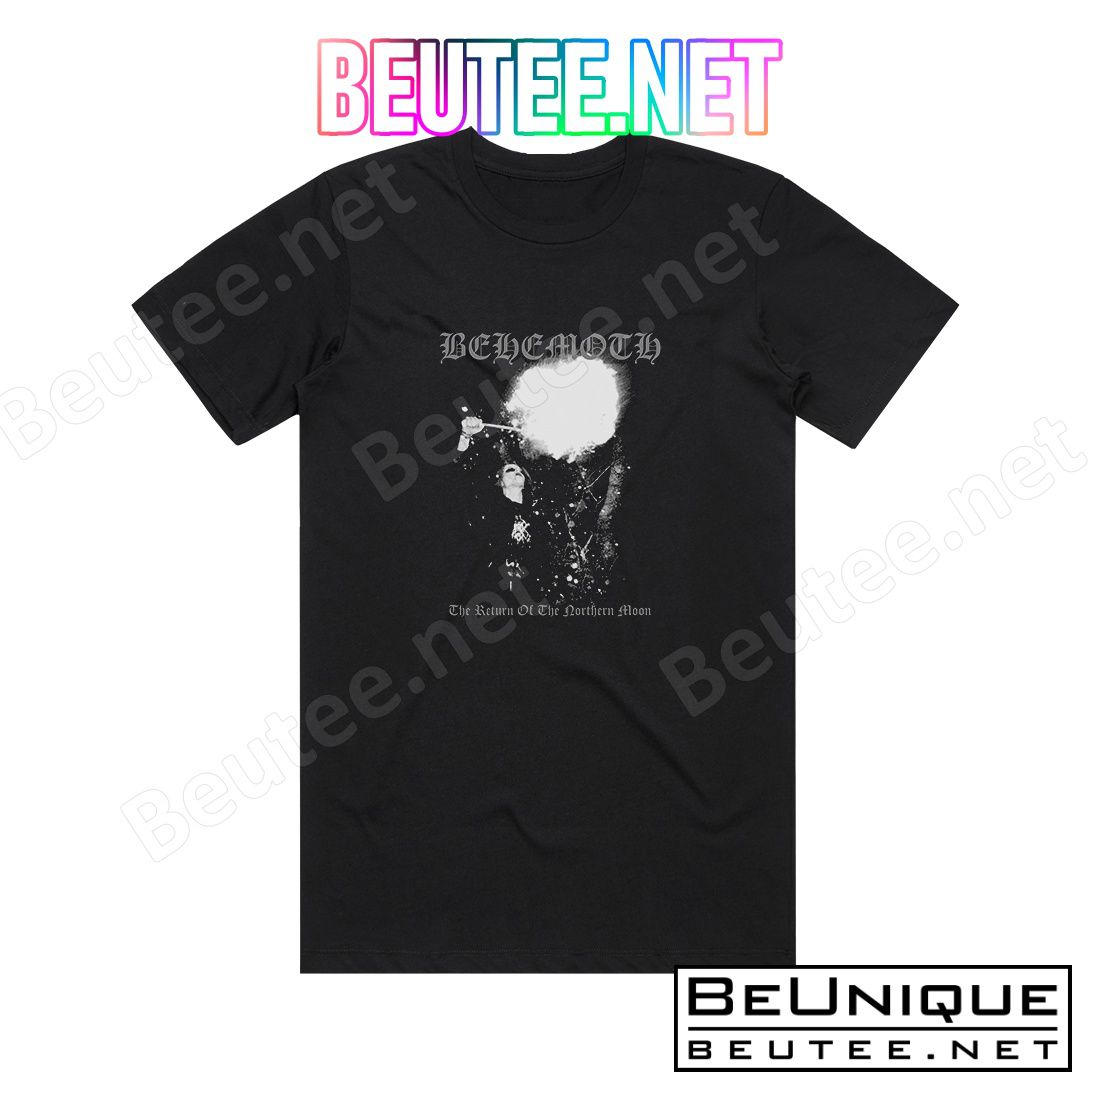 Behemoth The Return Of The Northern Moon 1 Album Cover T-Shirt